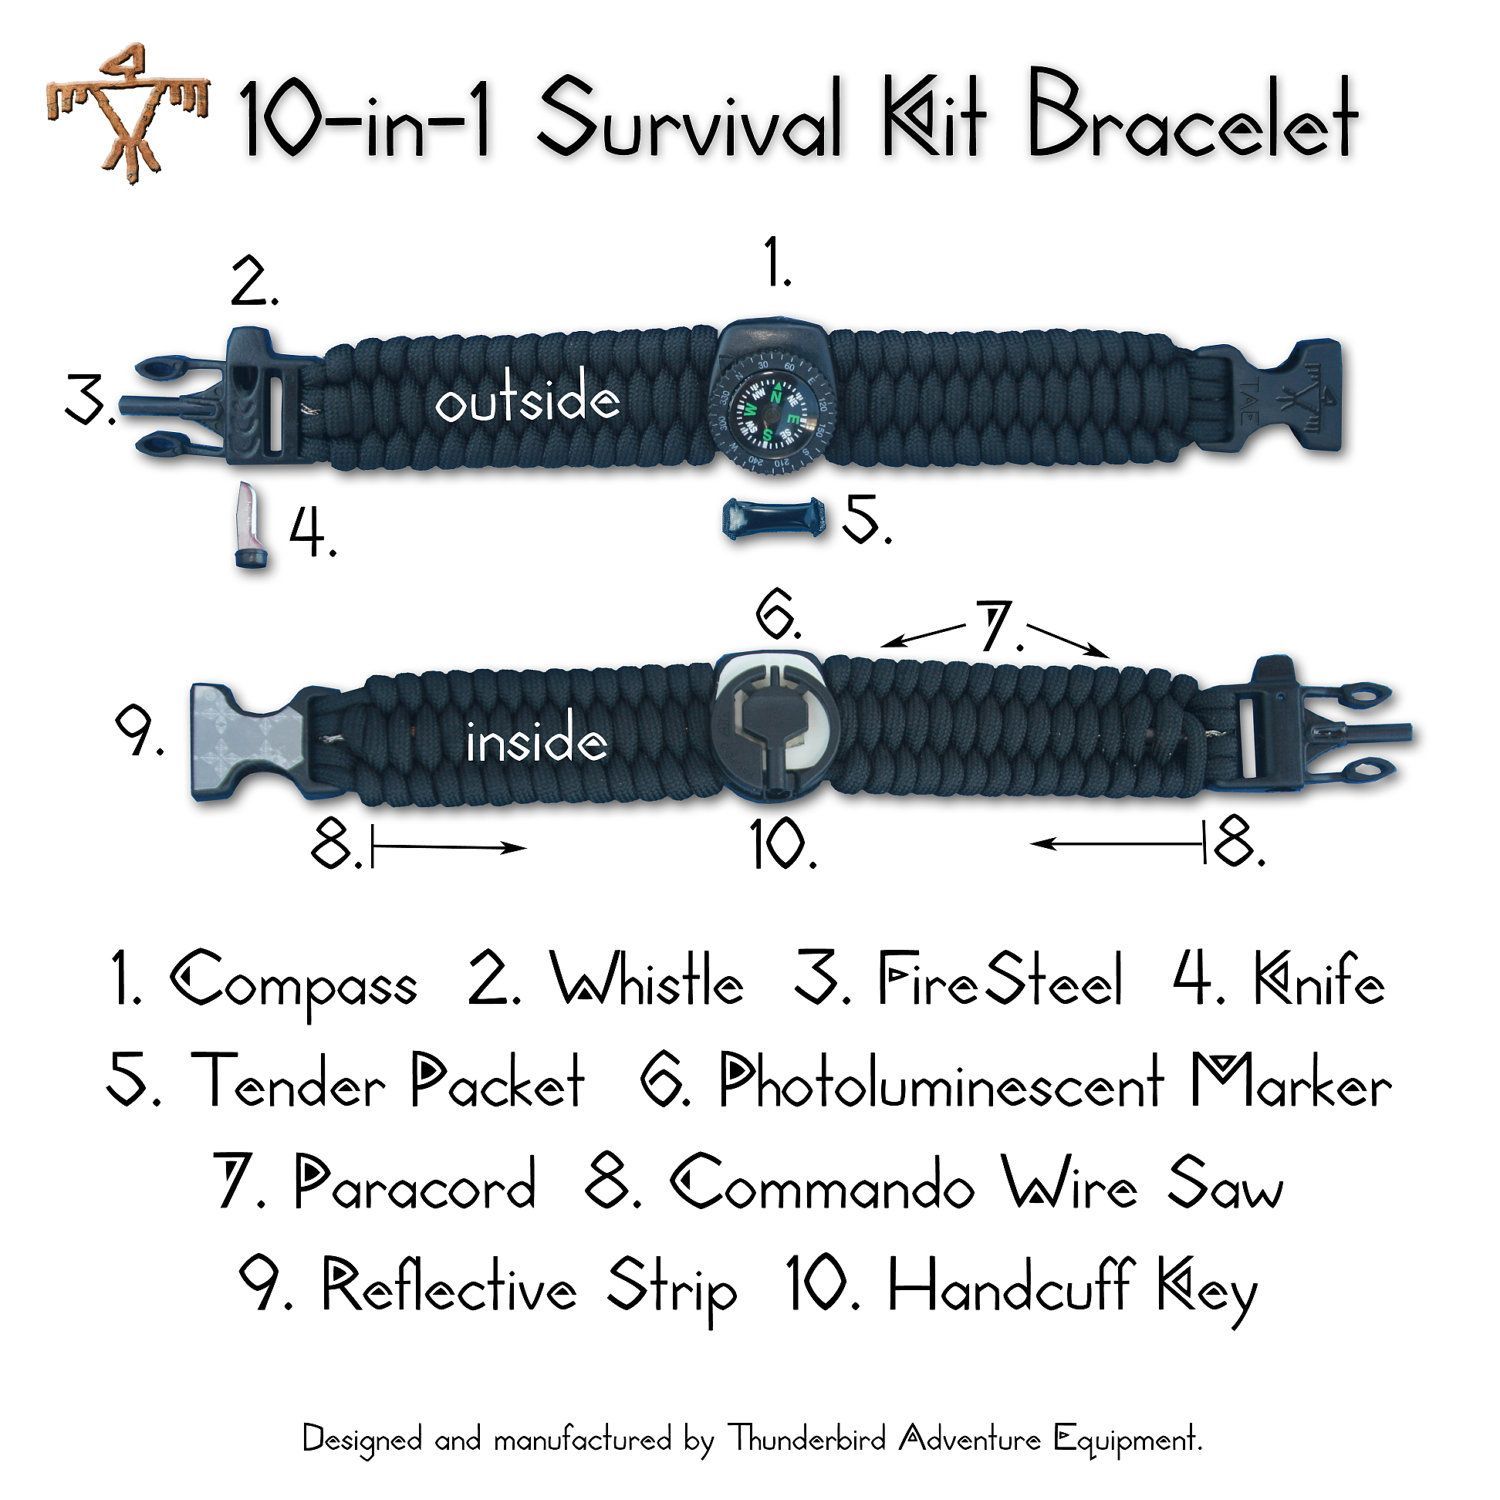 I WANT ONE!!!  10-in-1 Survival Kit Bracelet: Compass, Whistle, FireSteel, Knife